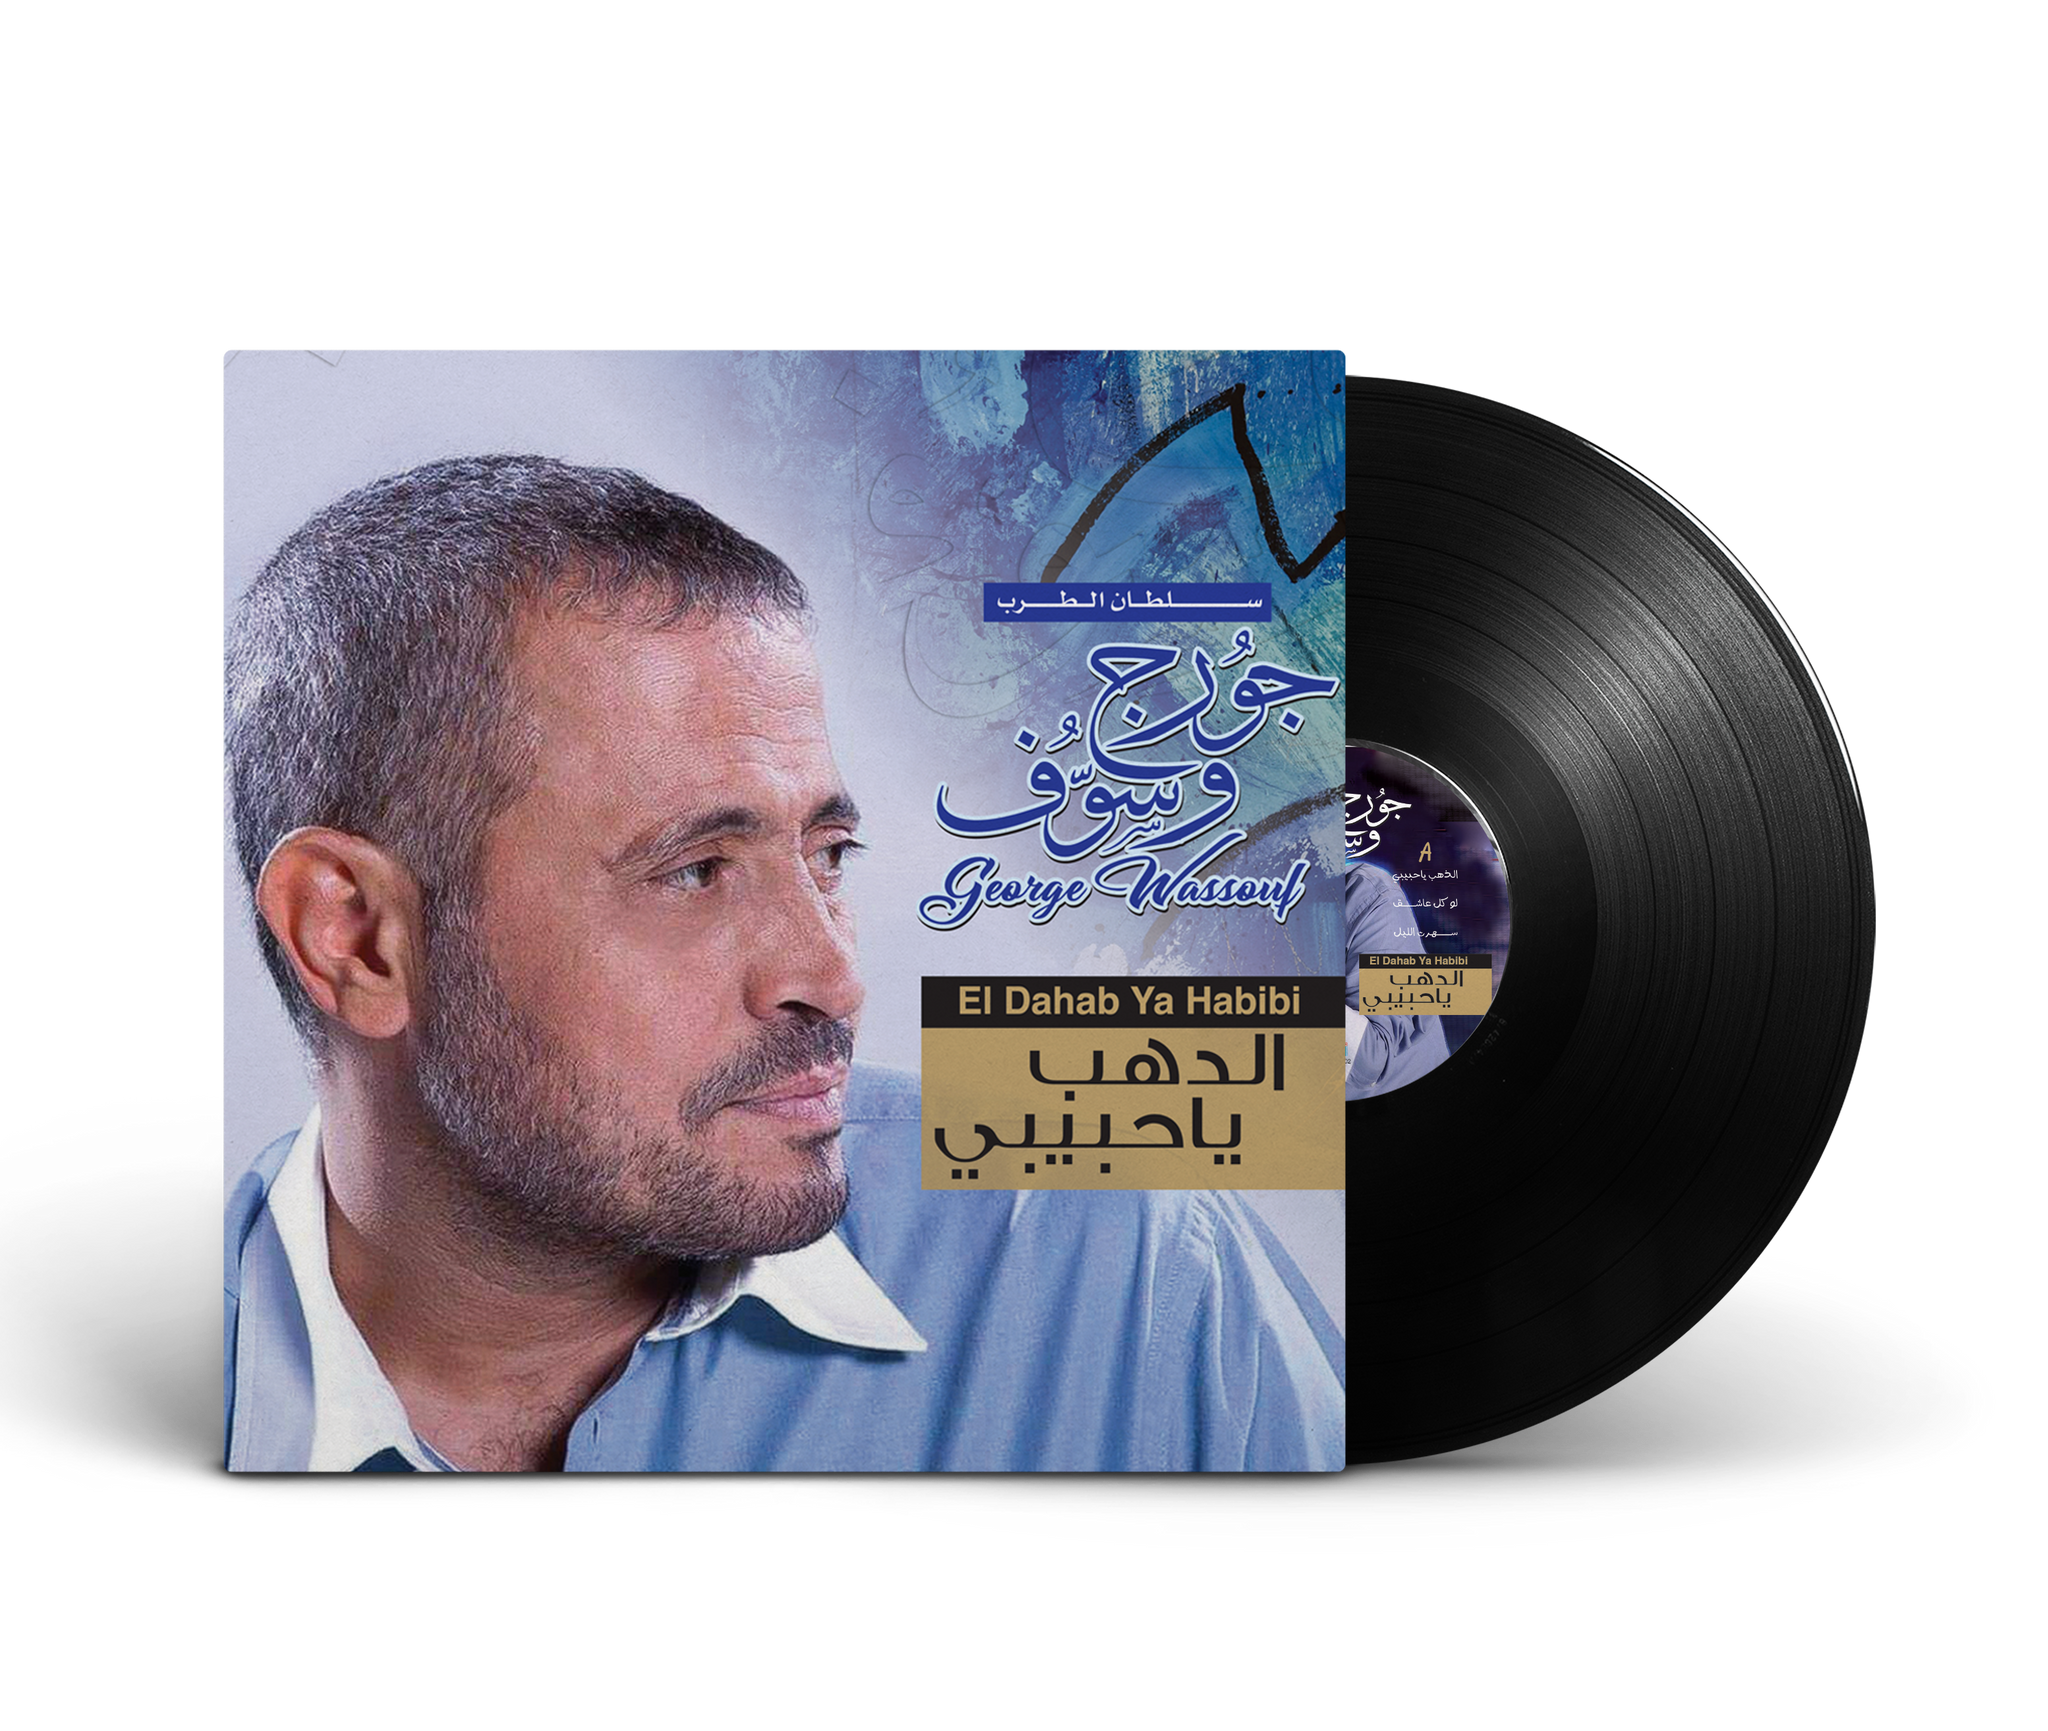 El Dahab Ya Habibi - George Wassouf